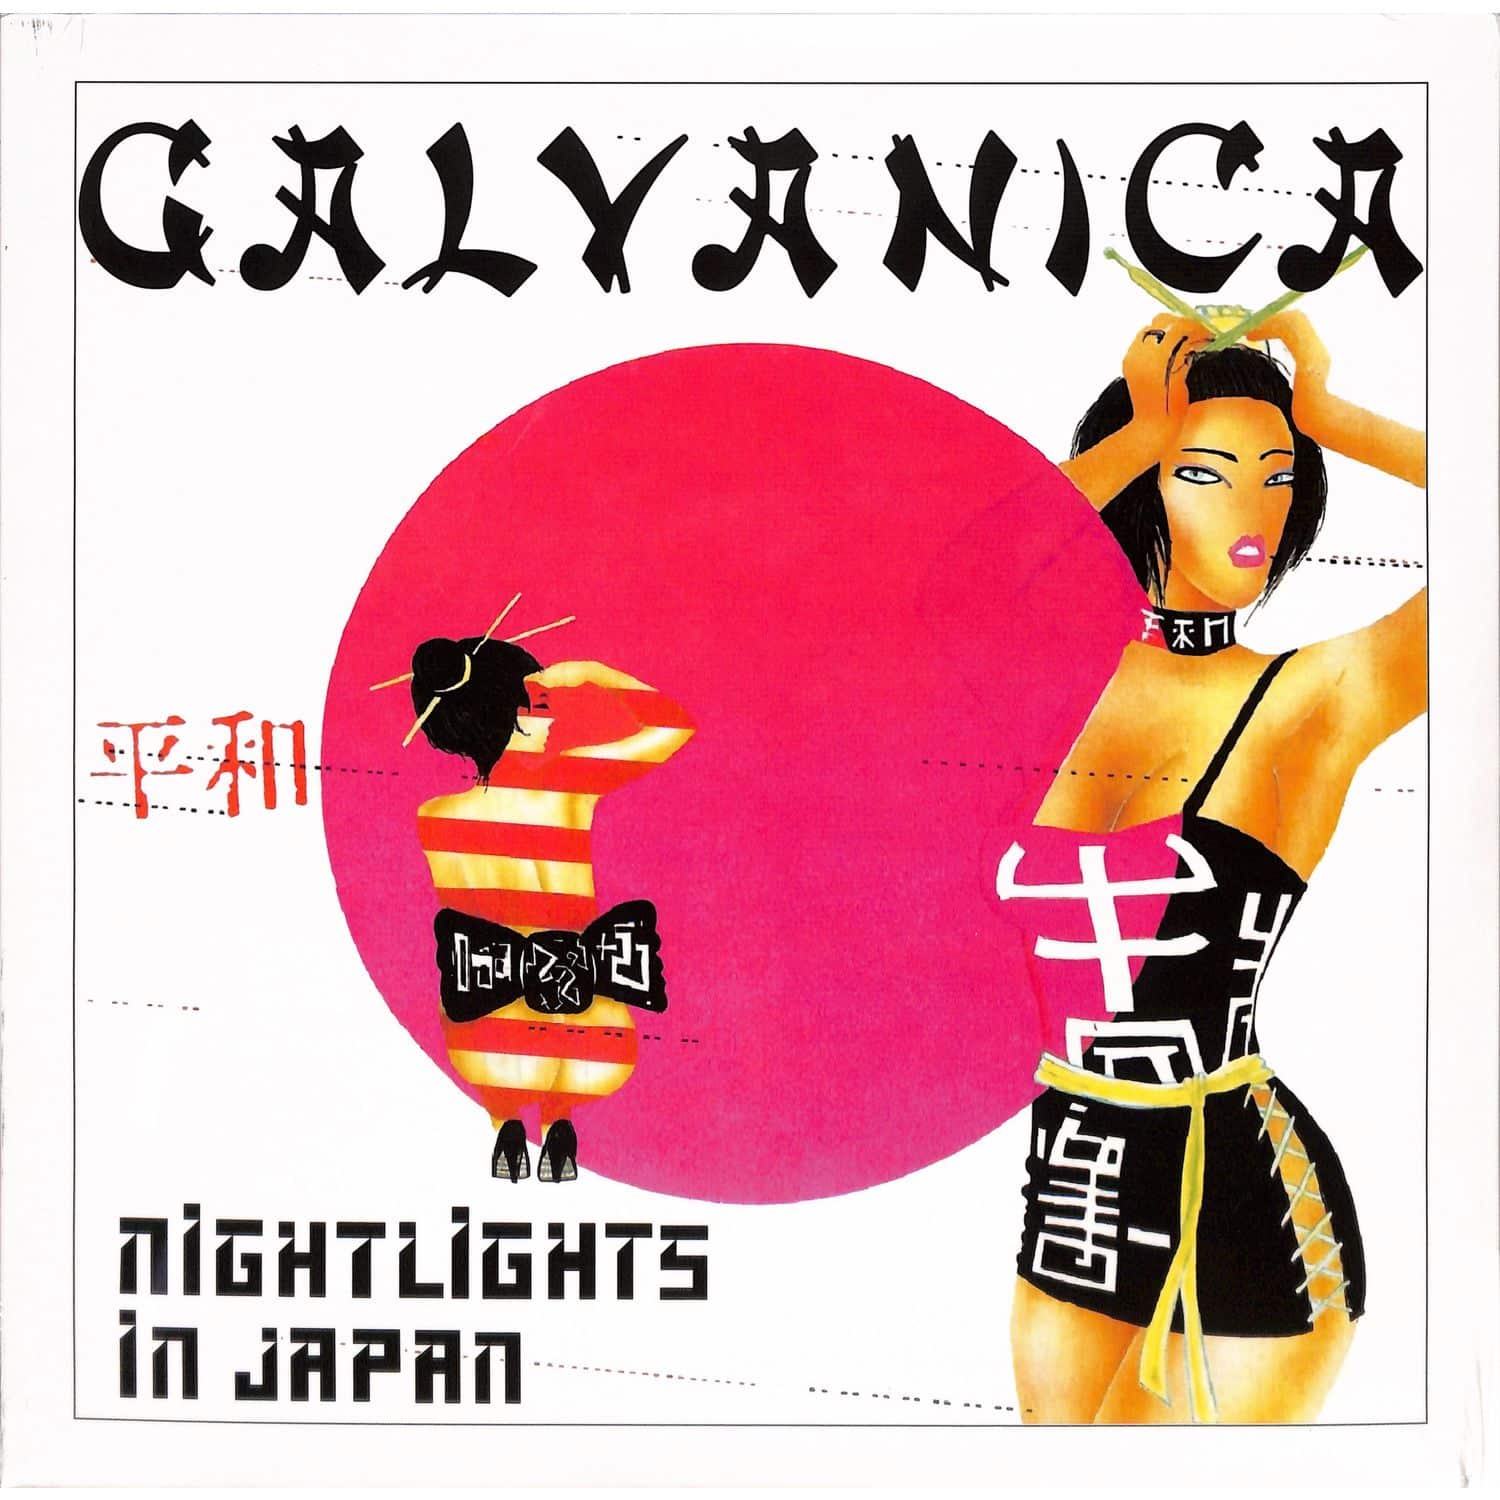 Galvanica - NIGHTLIGHTS IN JAPAN